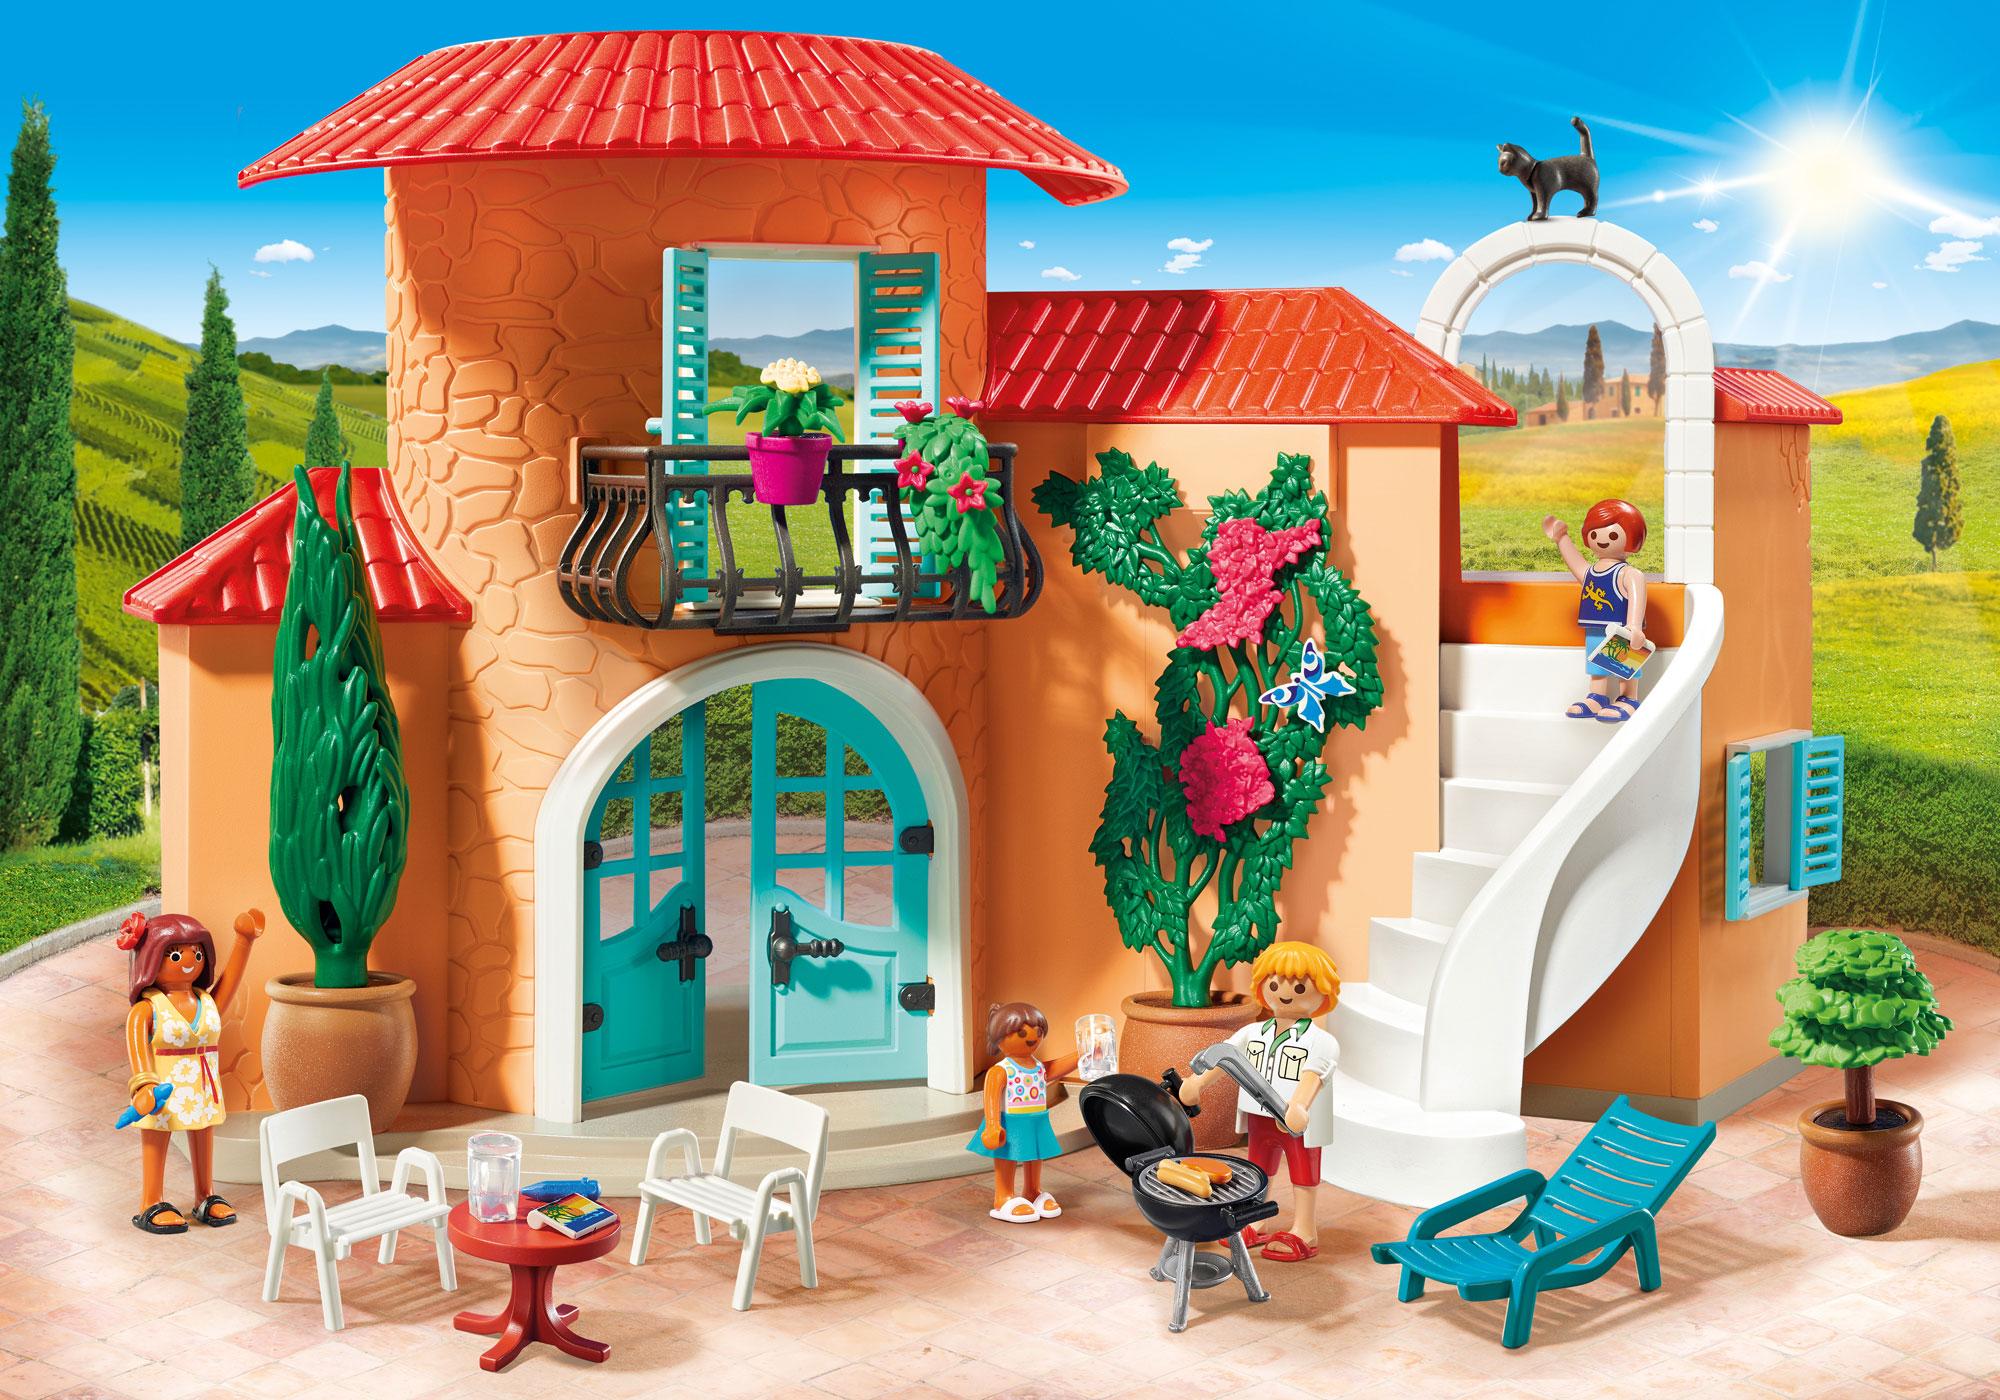 playmobil family fun villa